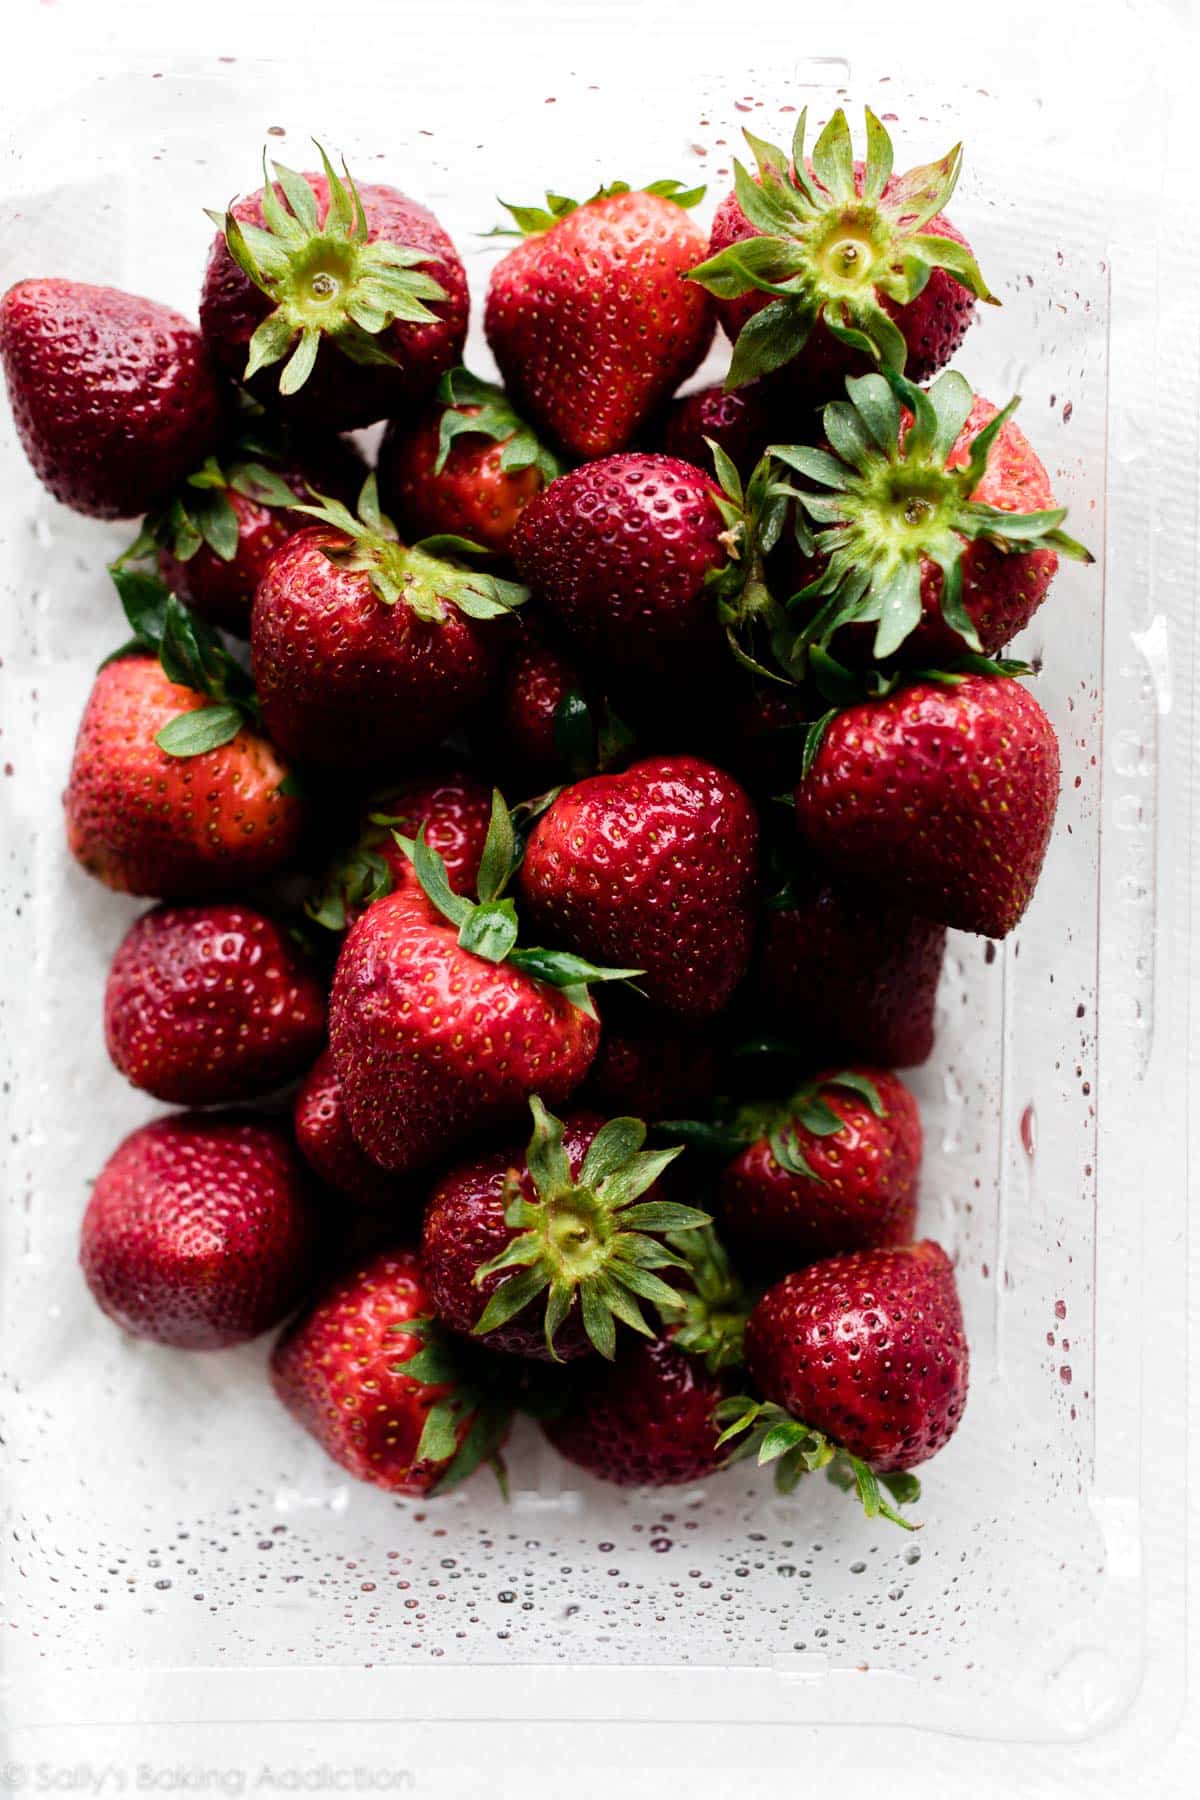 washed fresh strawberries